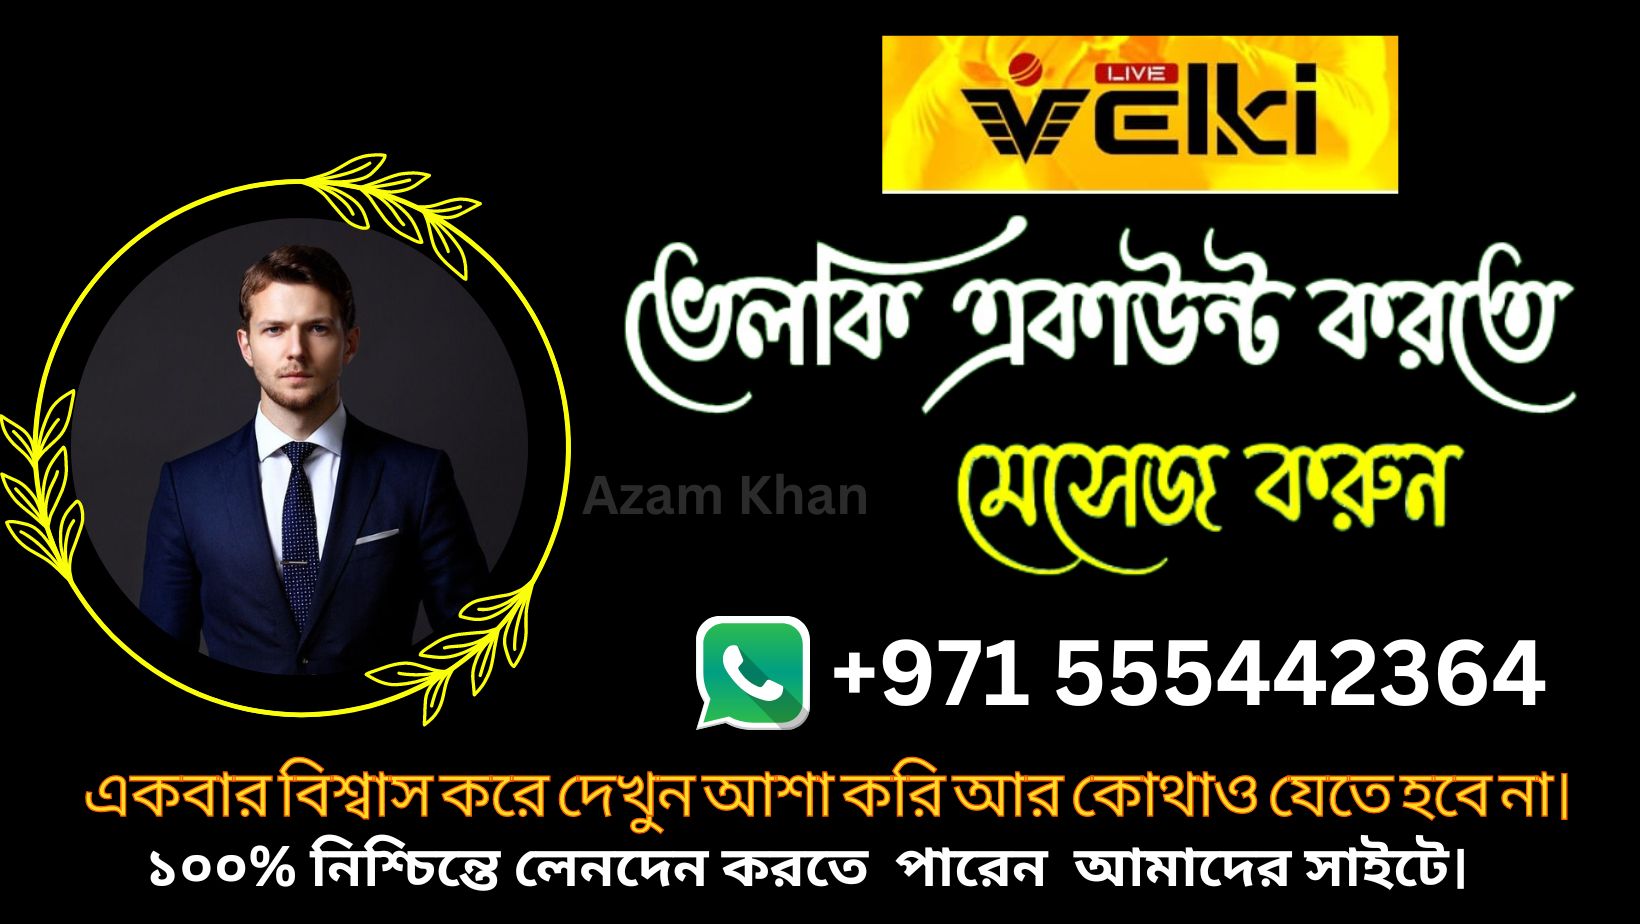 Banglades best betting website velki123.live